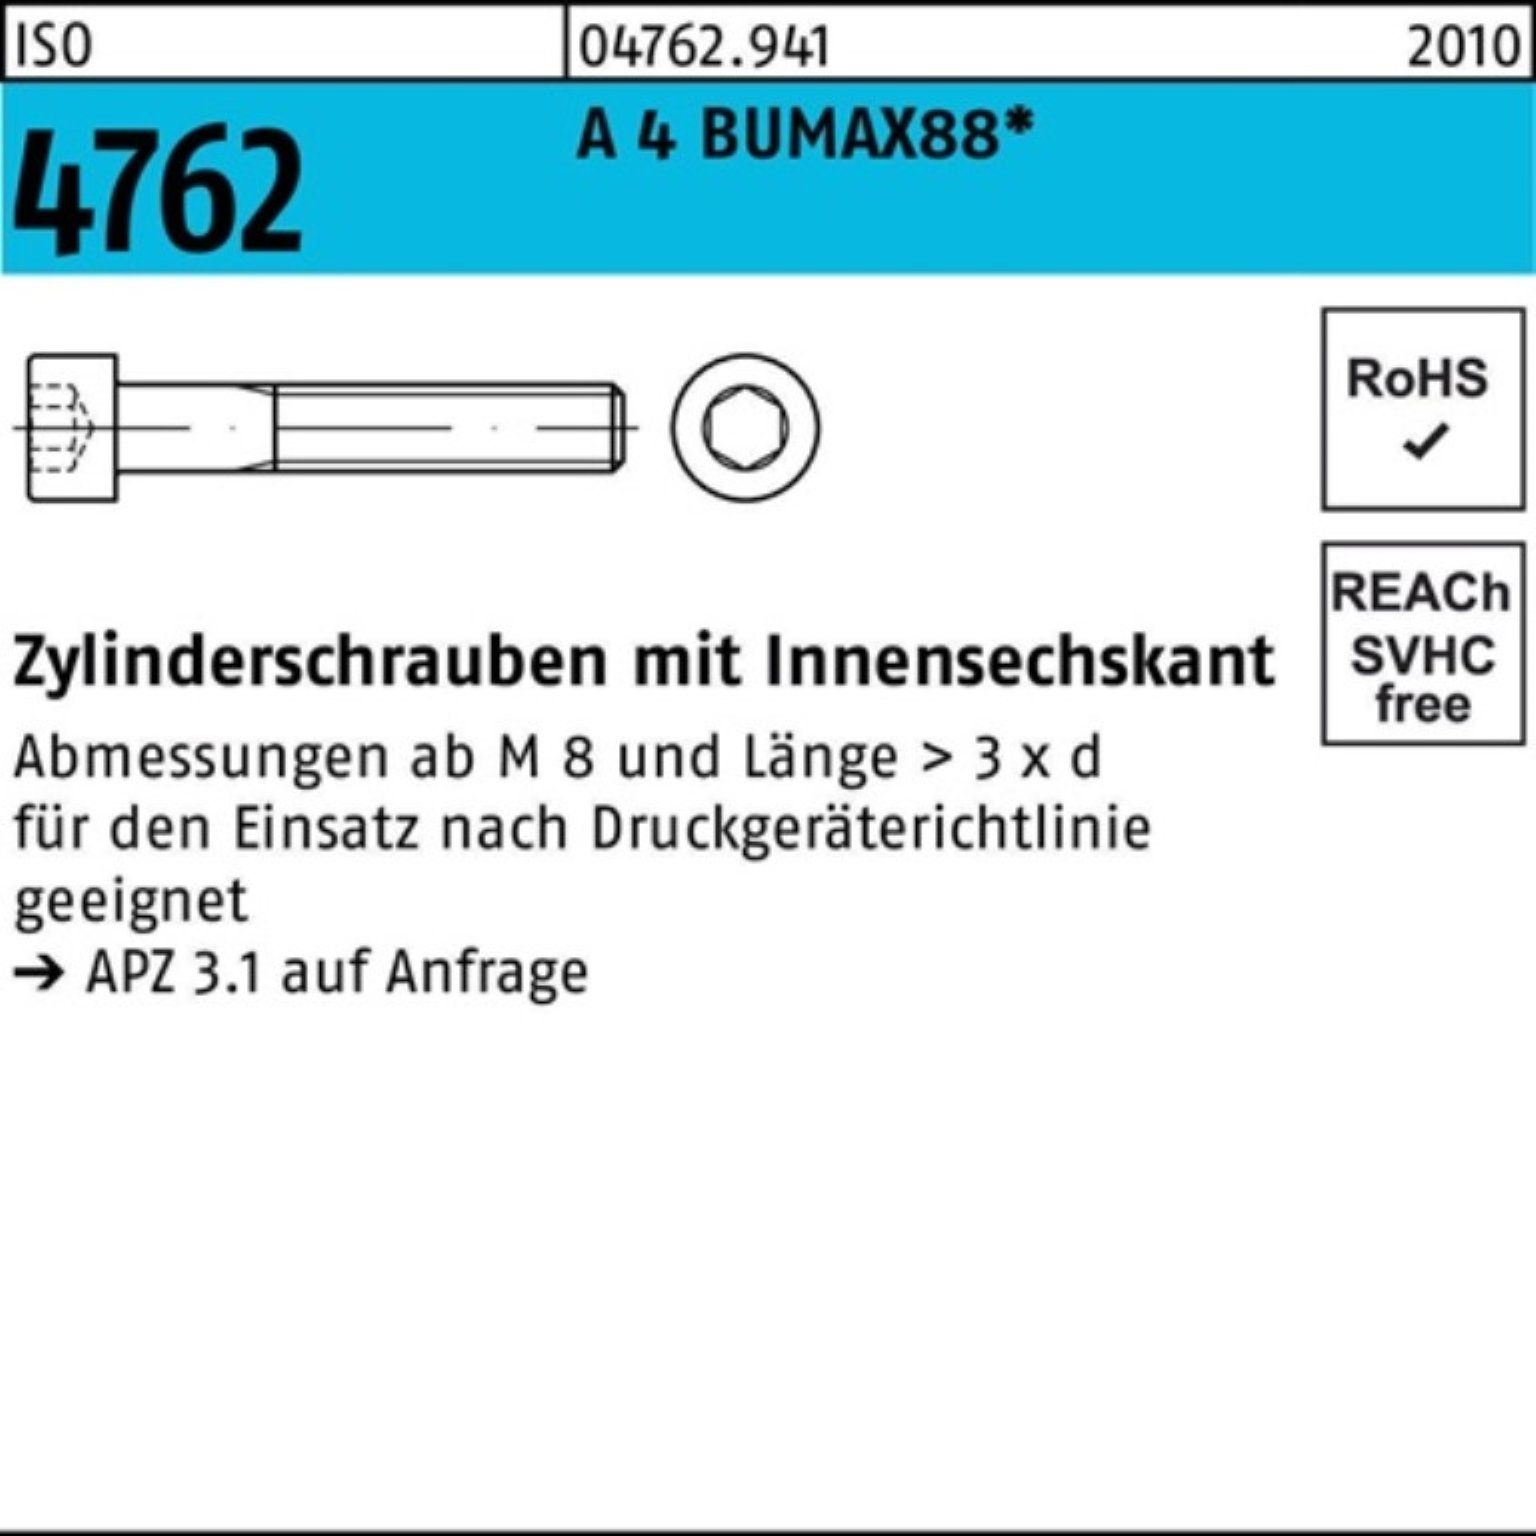 Bufab Zylinderschraube 200er Pack Zylinderschraube ISO 4762 Innen-6kt M4x 25 A 4 BUMAX88 200